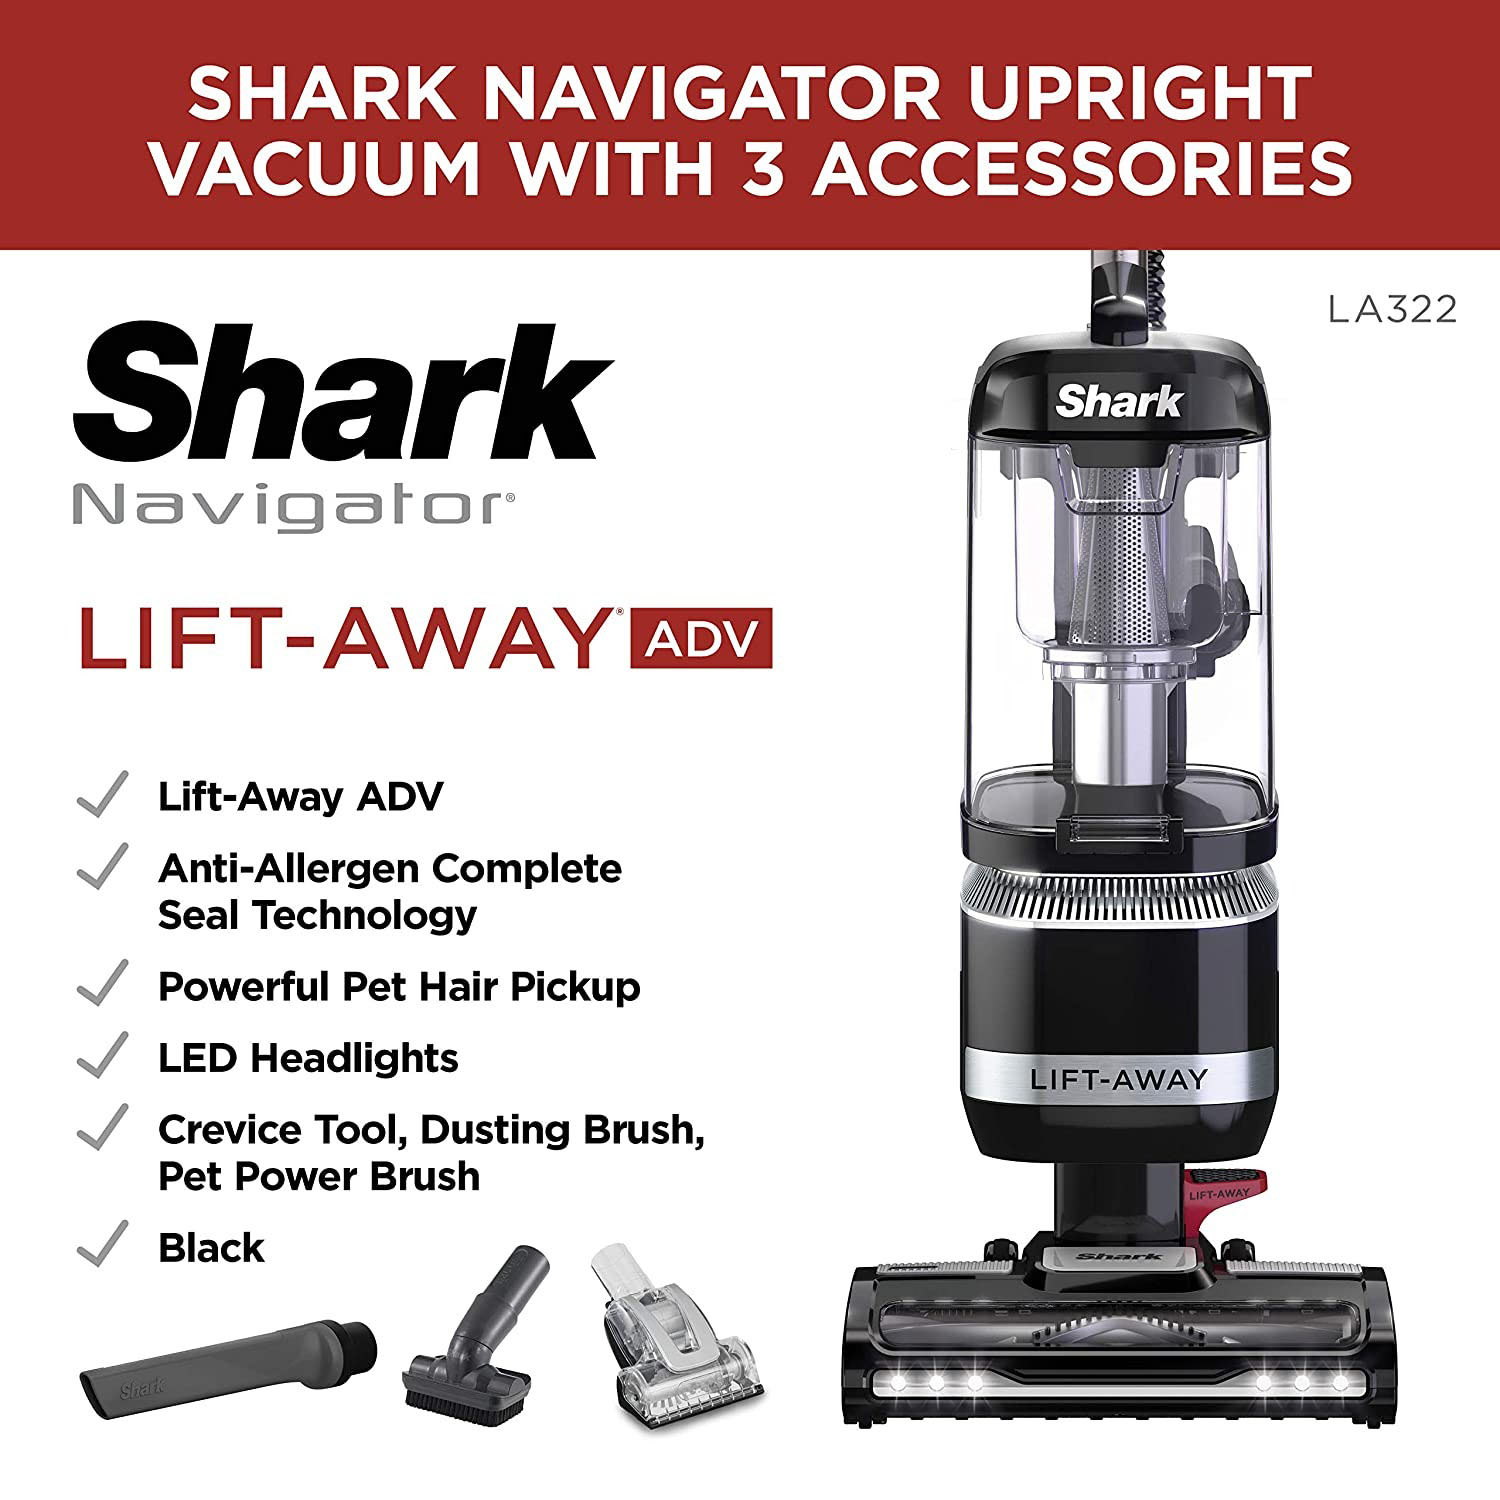 Shark LA322 Navigator Lift-Away ADV Upright Vacuum - image 2 of 11